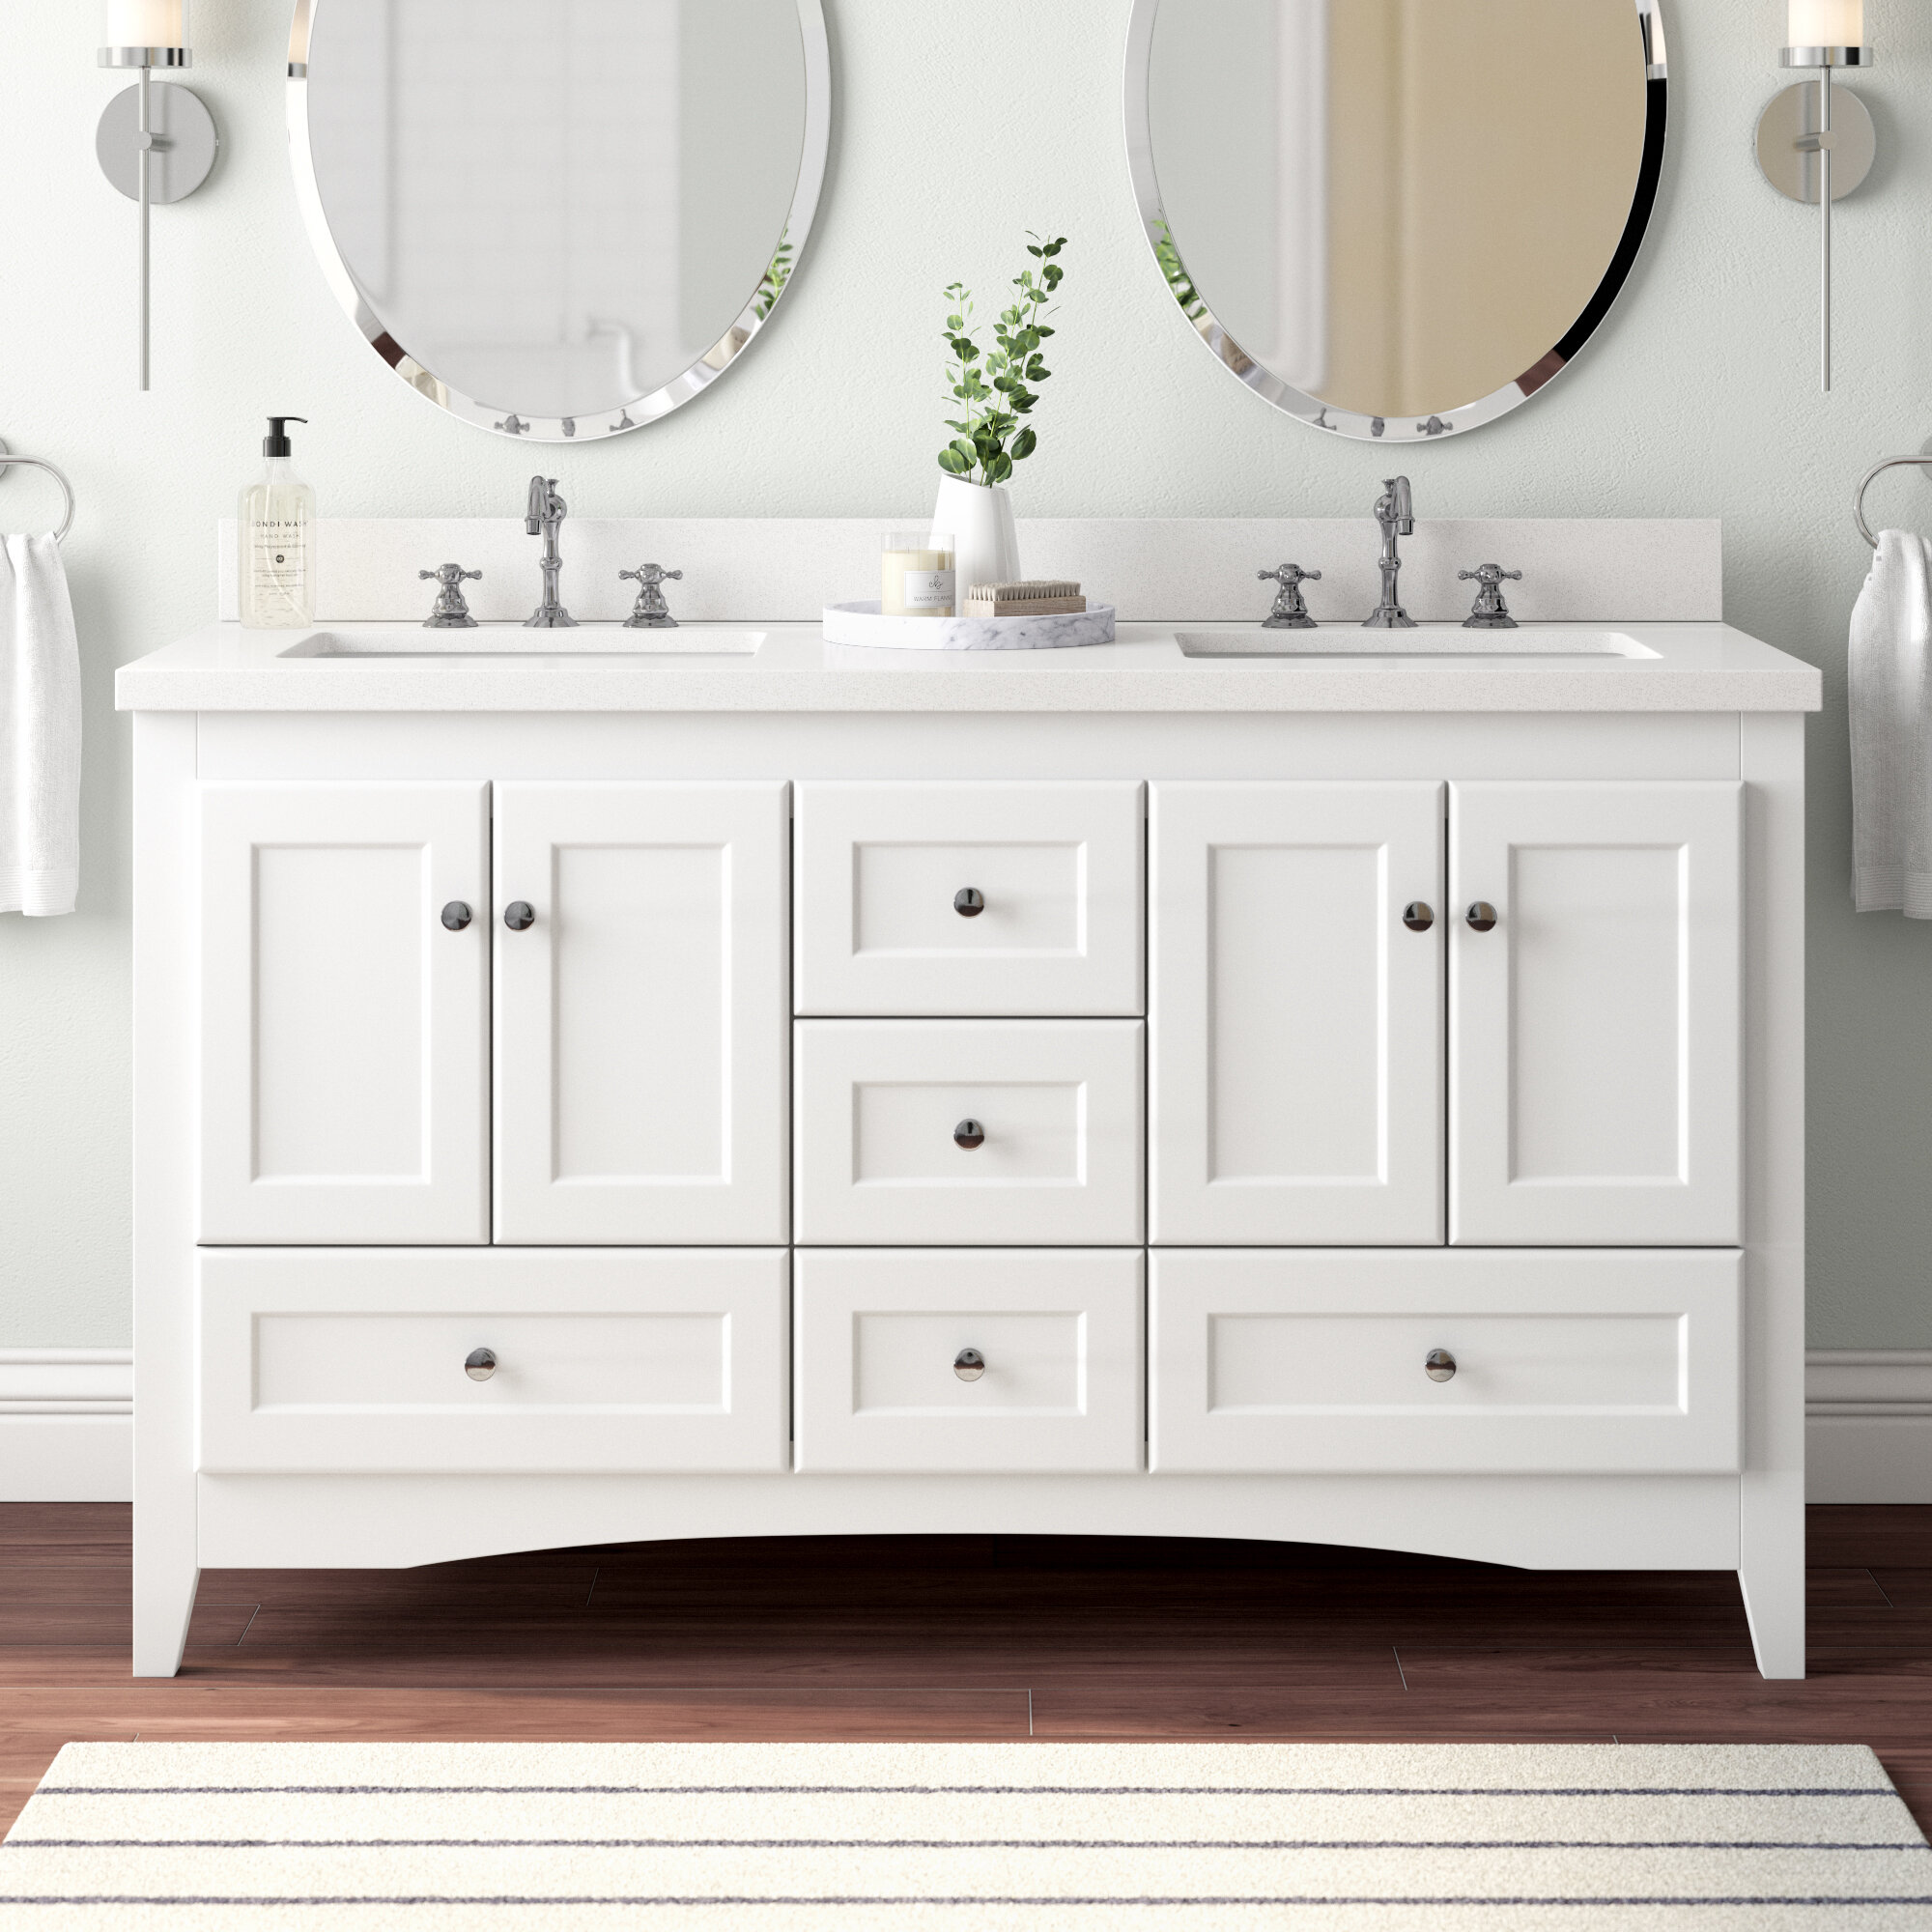 Abbey 60 Double Bathroom Vanity Carrara White Bathroom Sink Vanities Accessories Tools Home Improvement Viteduau